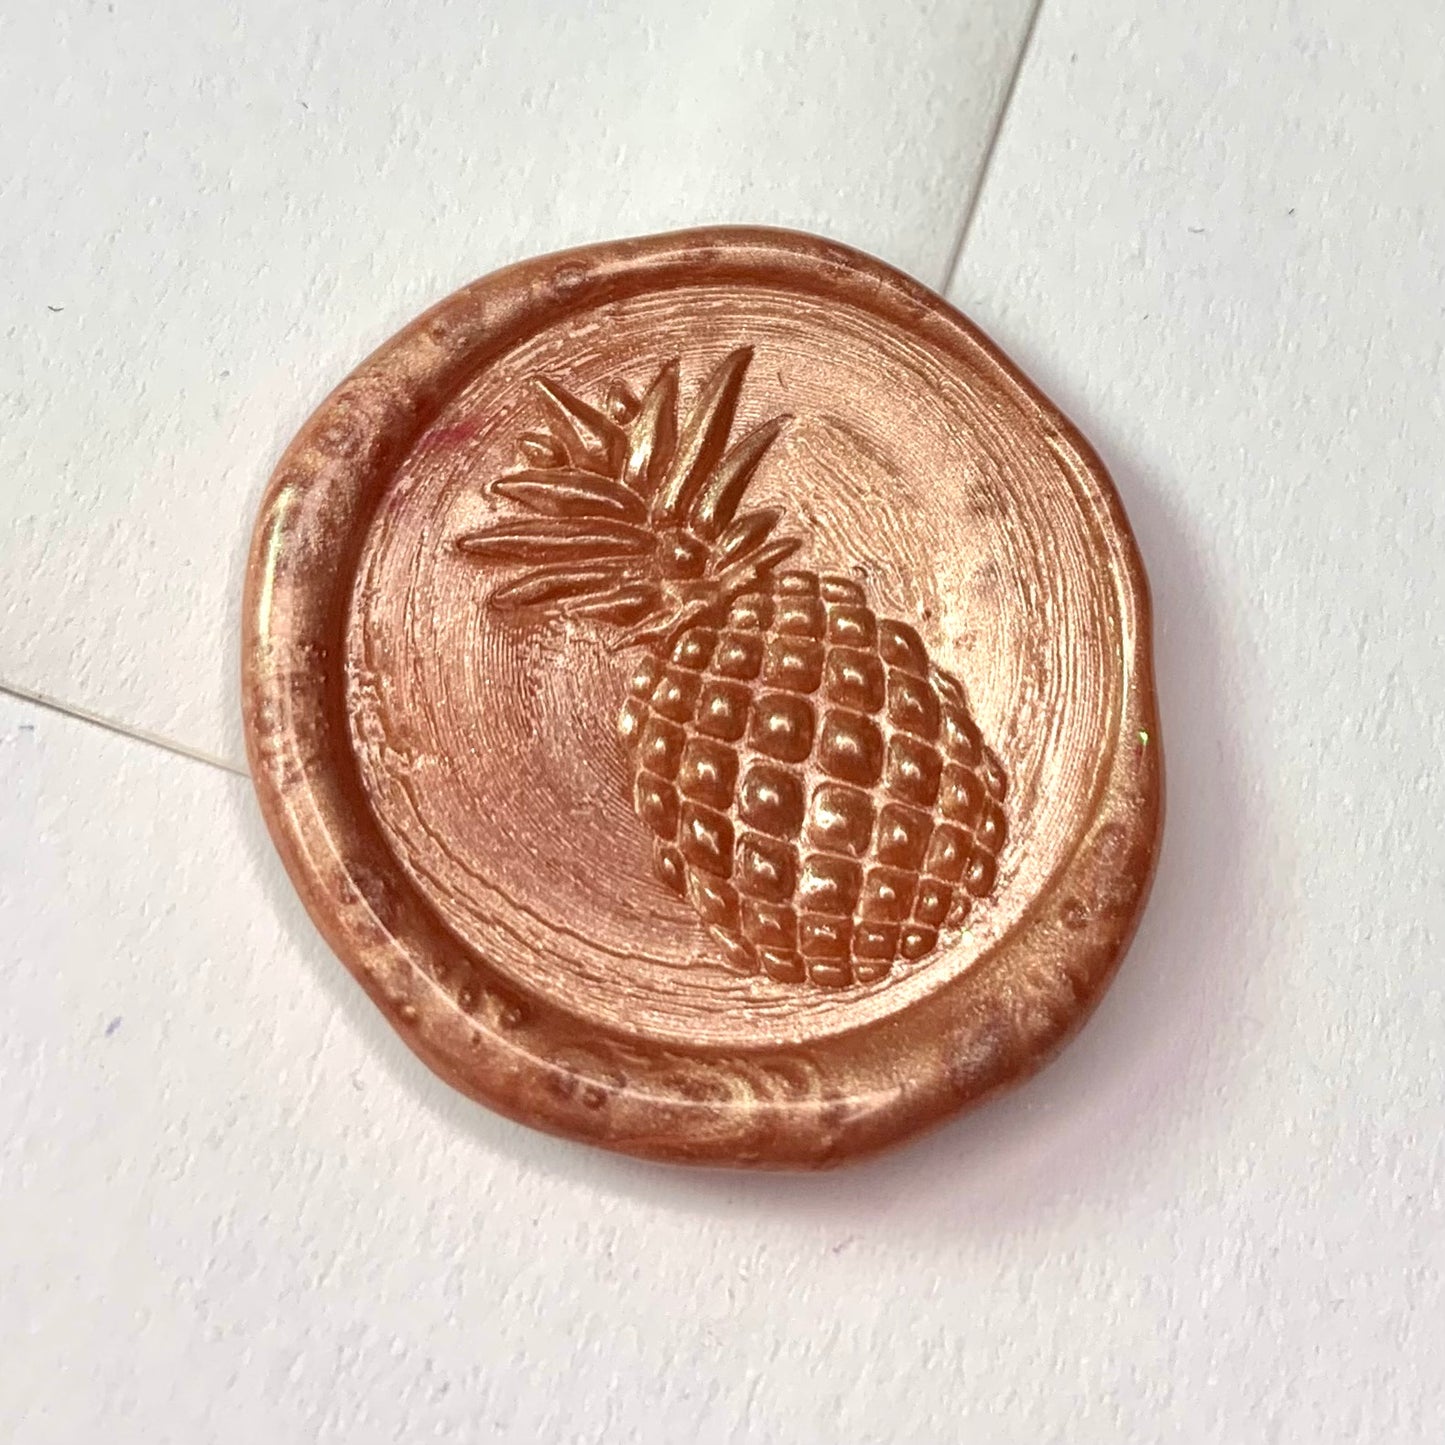 Pineapple Wax Seal - self sealing